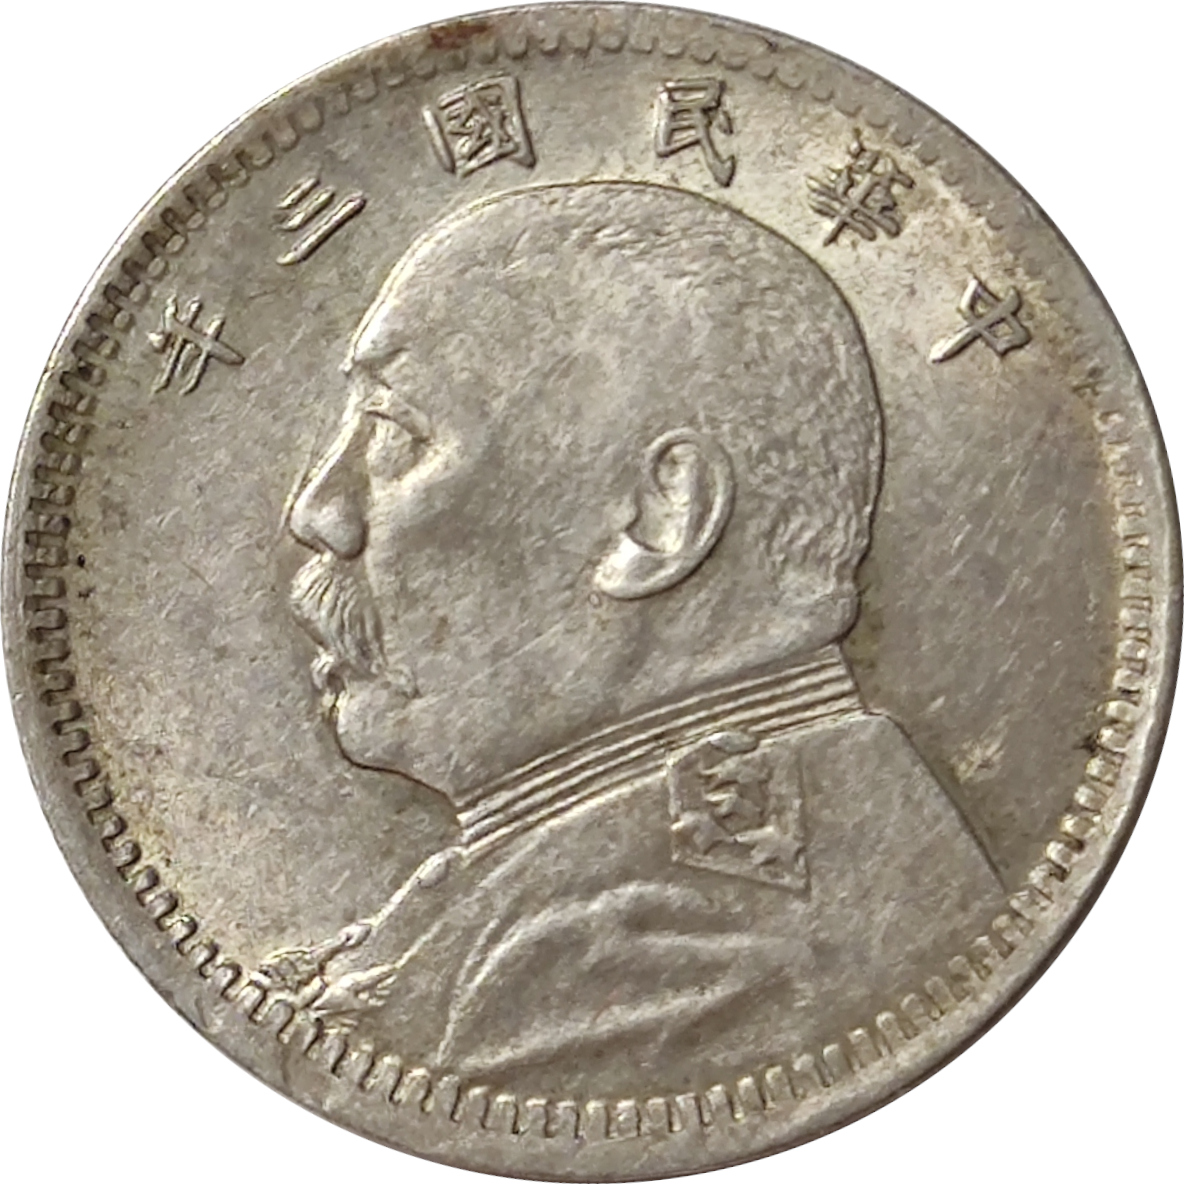 10 cents - Yuan Shikai